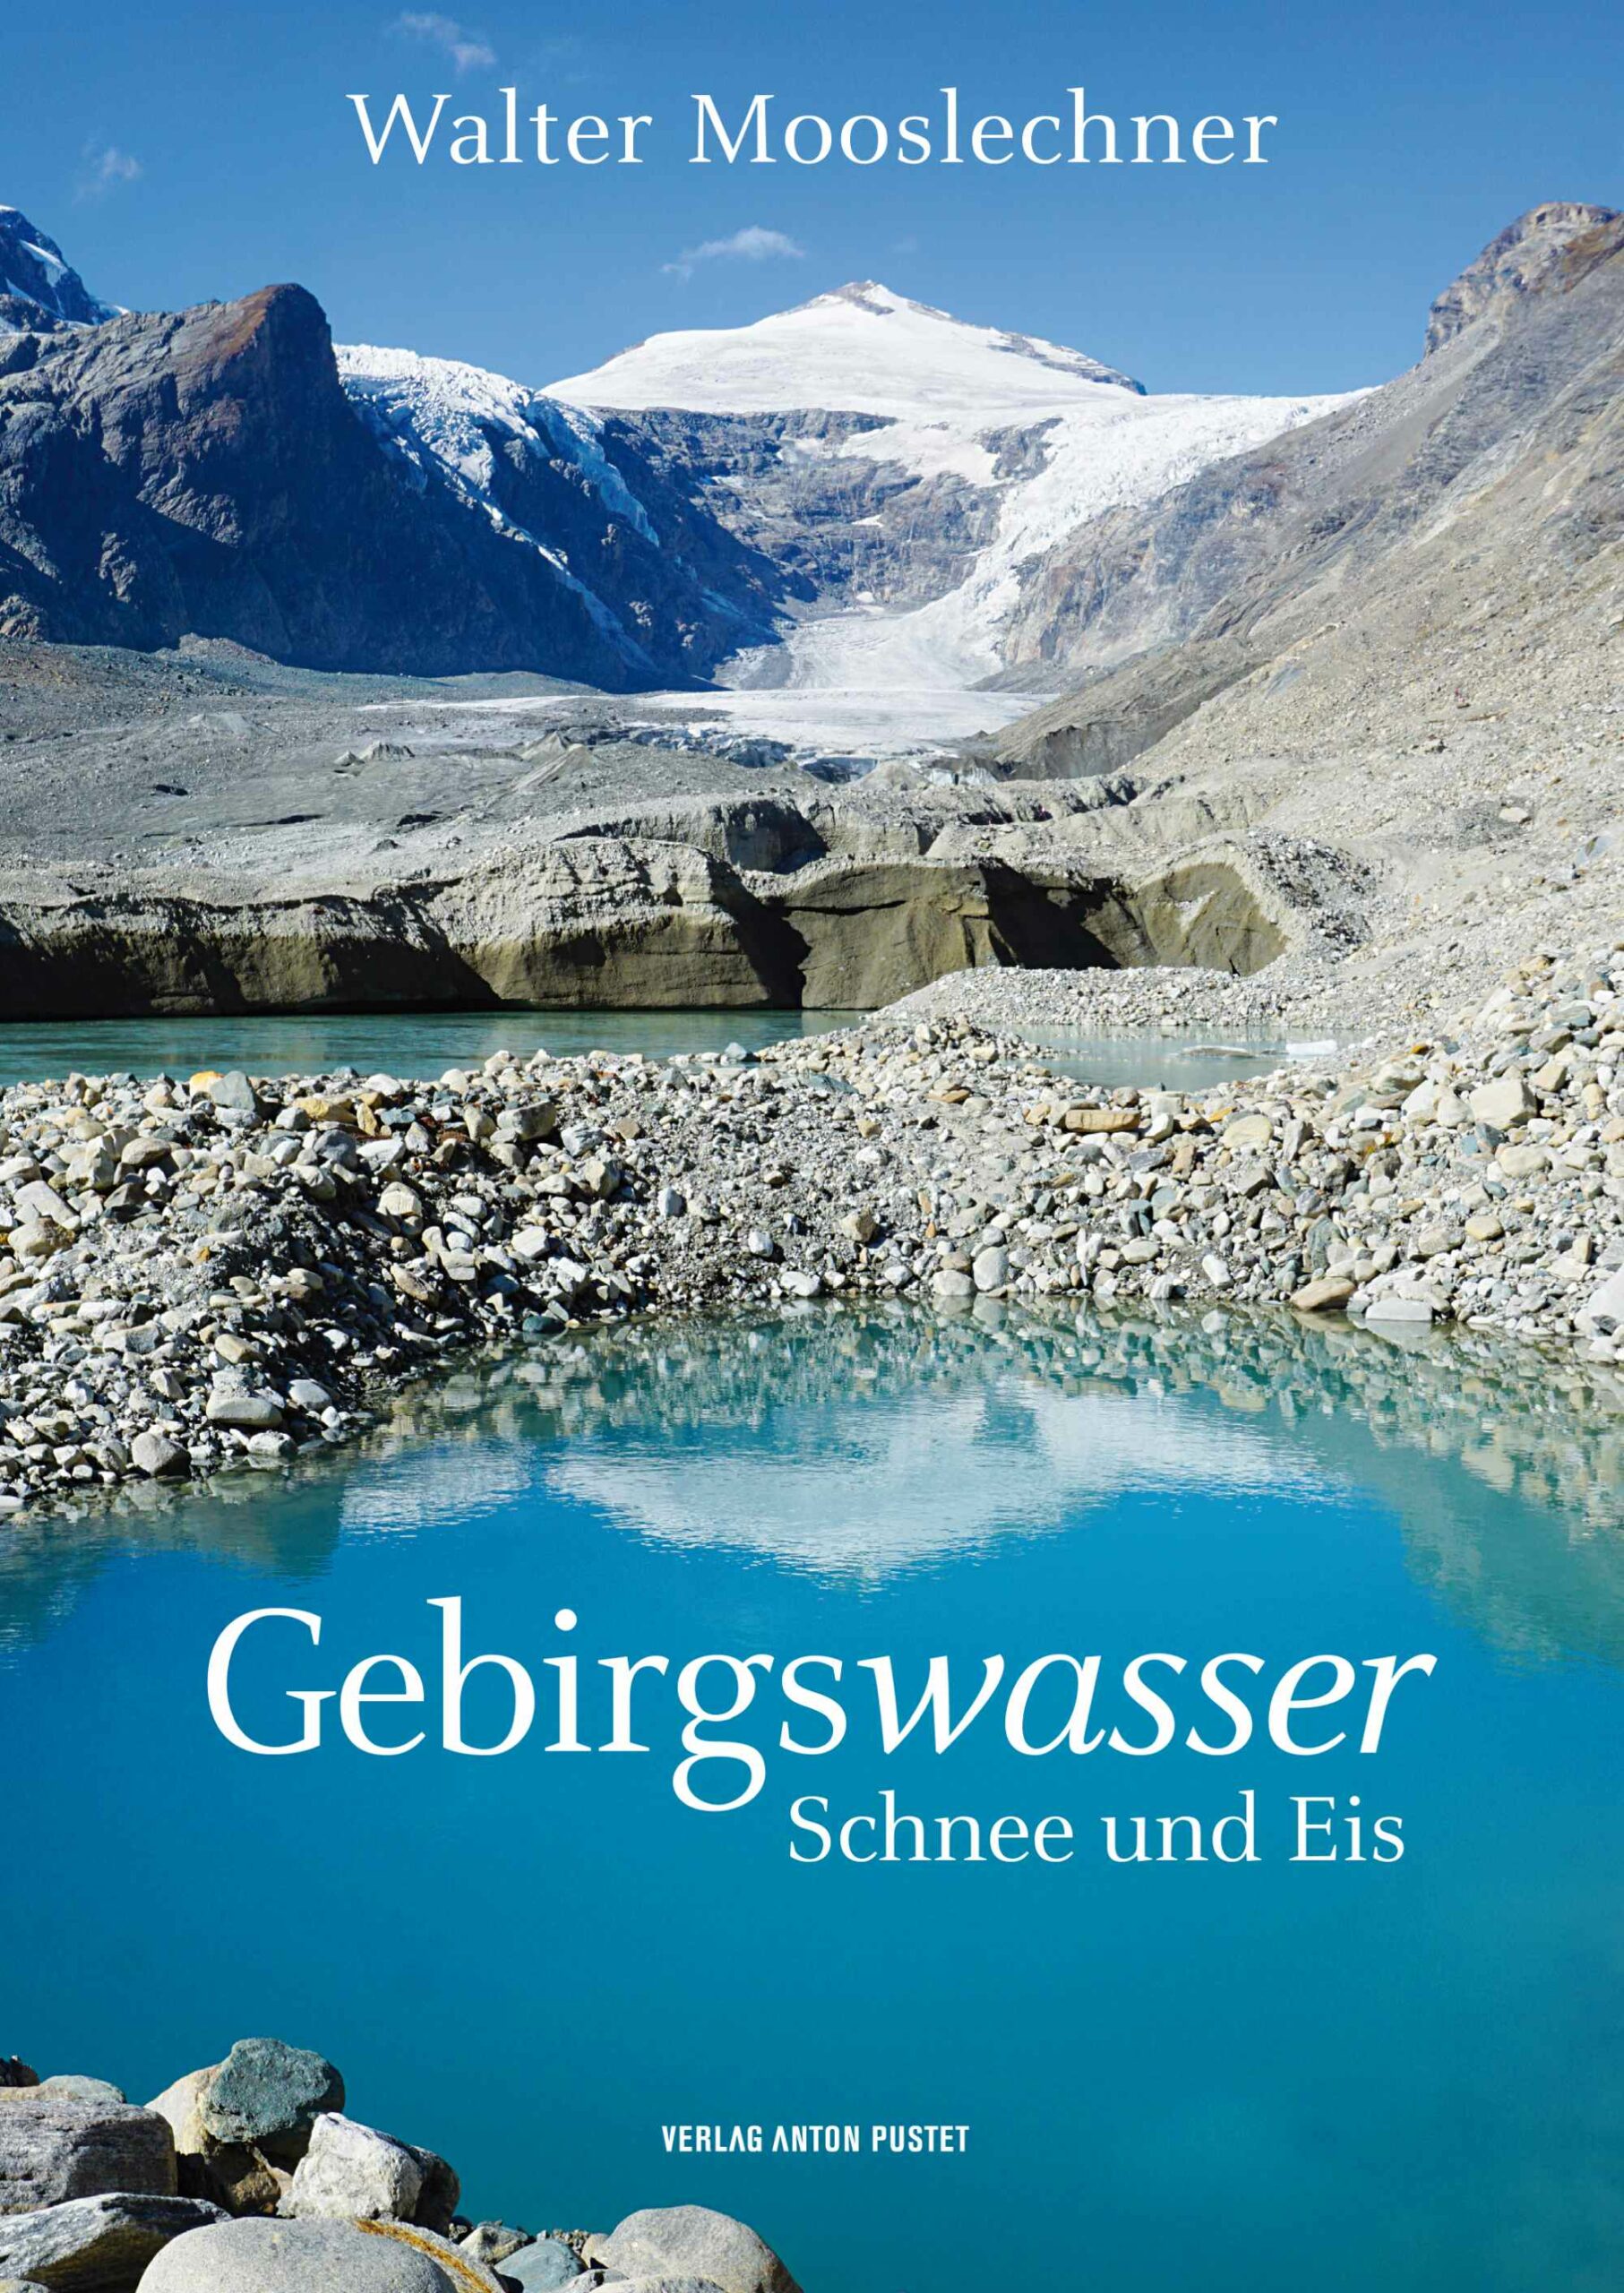 Gebirgswasser (c) Verlag Anton Pustet